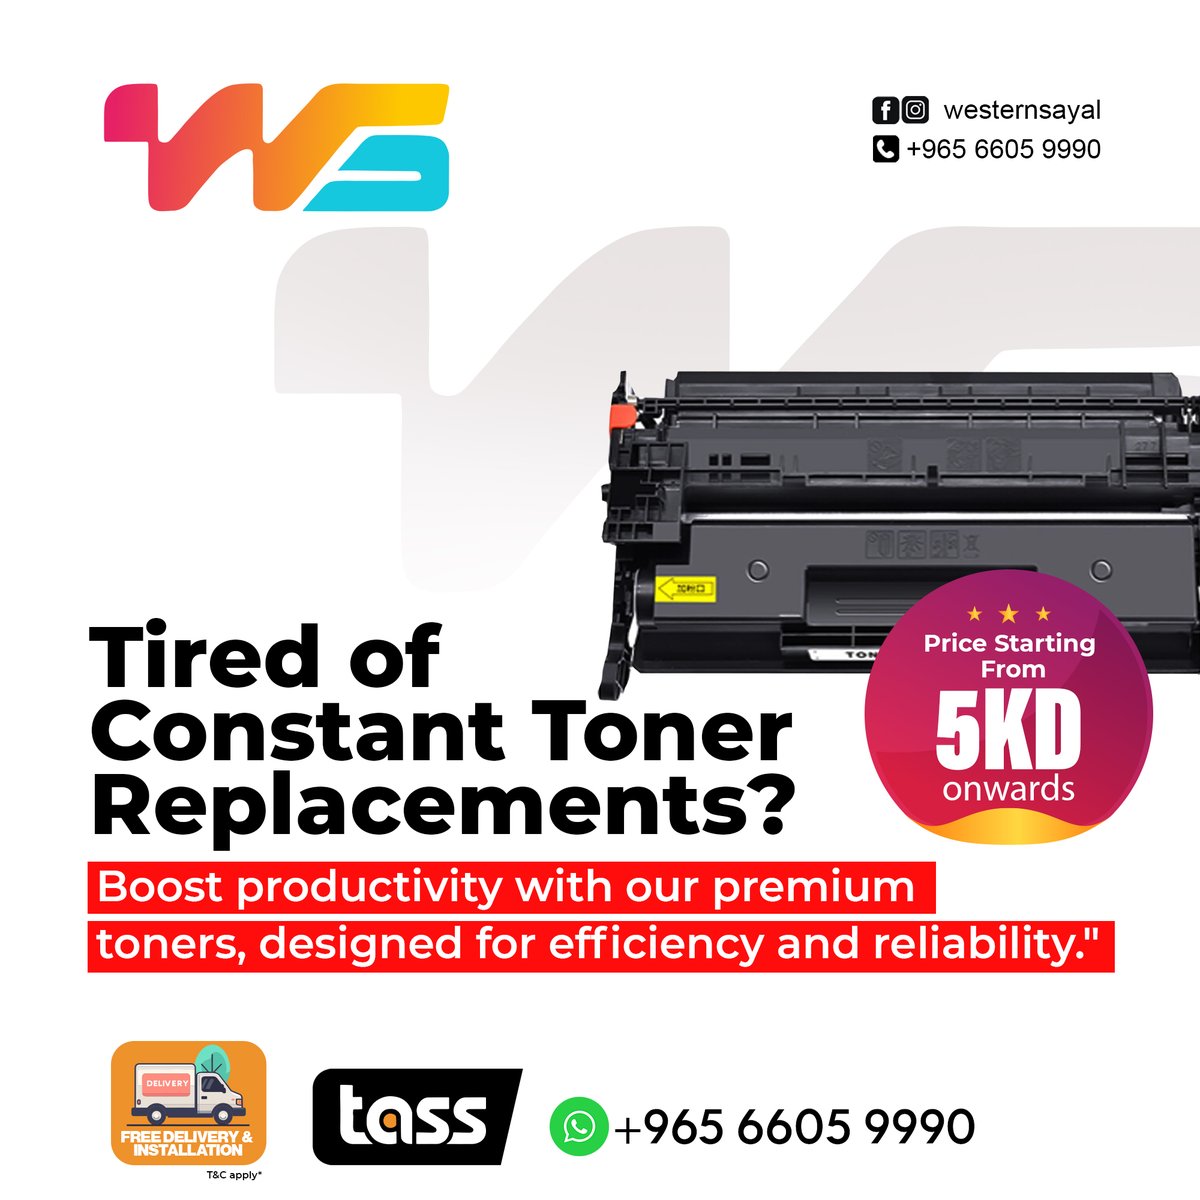 End the cycle of constant toner replacements!
📷 +965 6605 9990

#WesternSayal #Tass #PrinterPros #printer #printers #3dprinter #print #toner #cartridge #ink #printing #digitalprinting #printingservices #printshop #kuwait #PrintingPerfection #QualityToners #Japanesetonerpowder